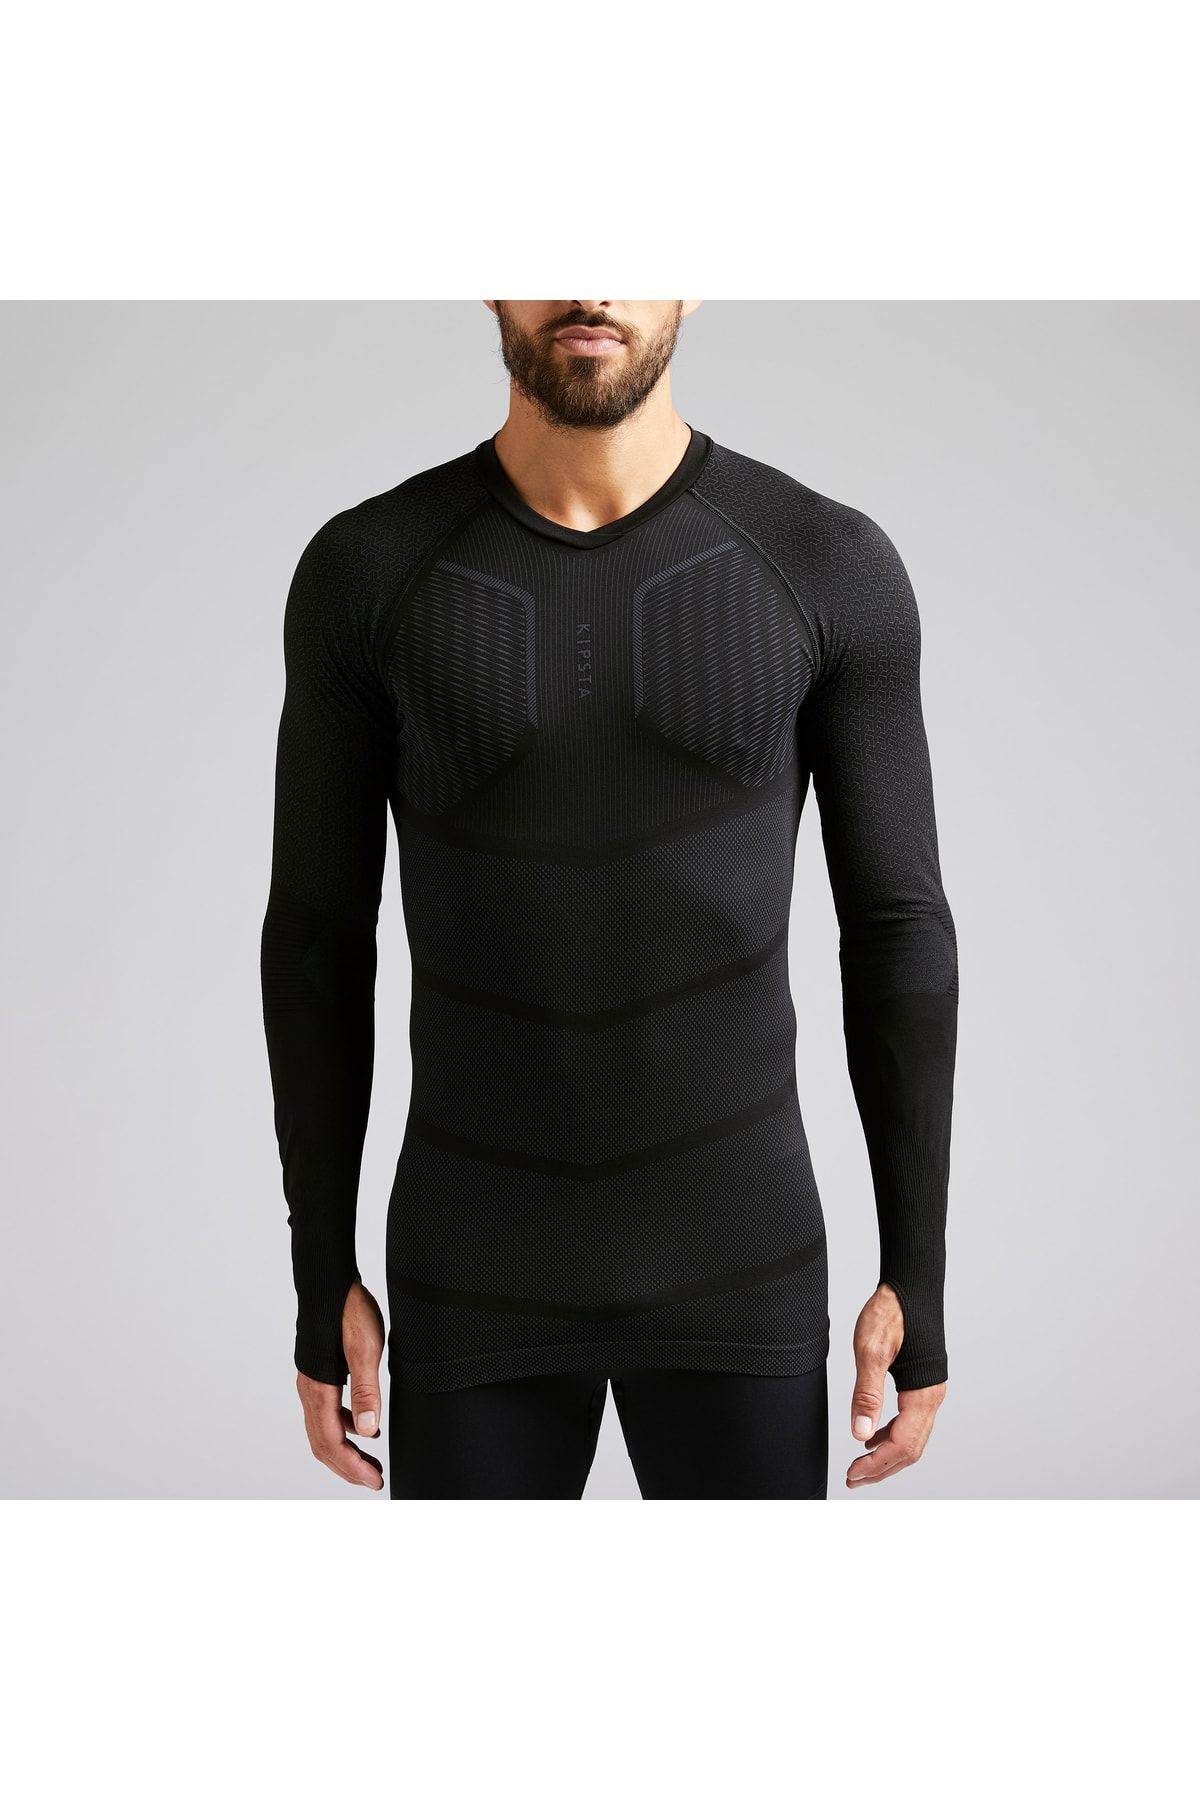 Decathlon Adult Long Sleeve Thermal Underwear Khaki Keepdry 500